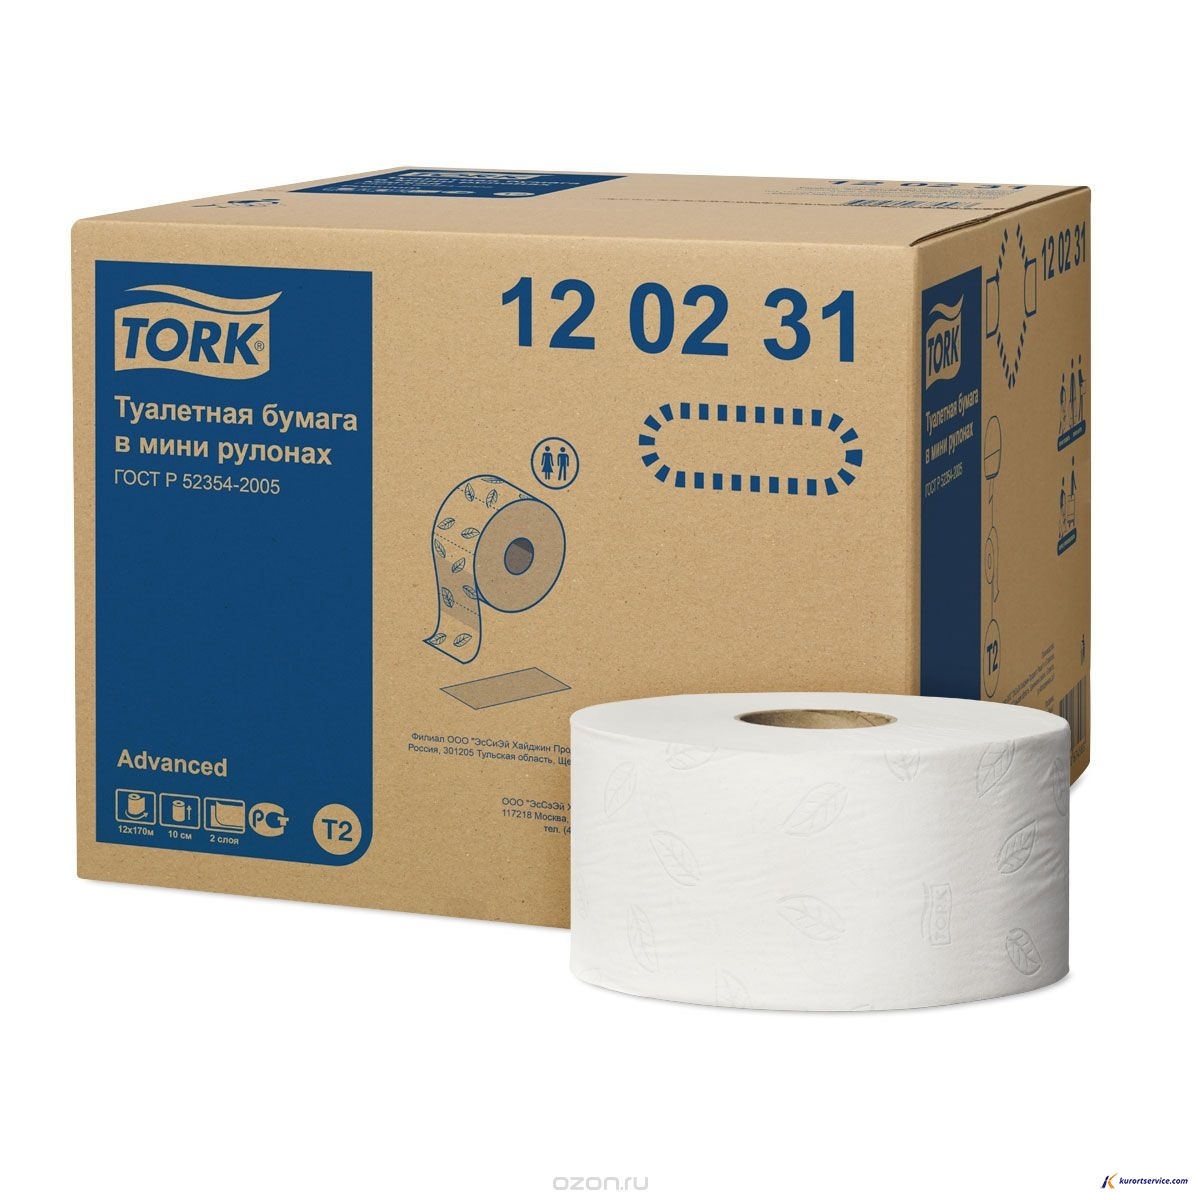 Tork Туалетная бумага в мини-рулонах 2сл 170м 120231 T2 купить в интернет-магазине Курорт Сервис